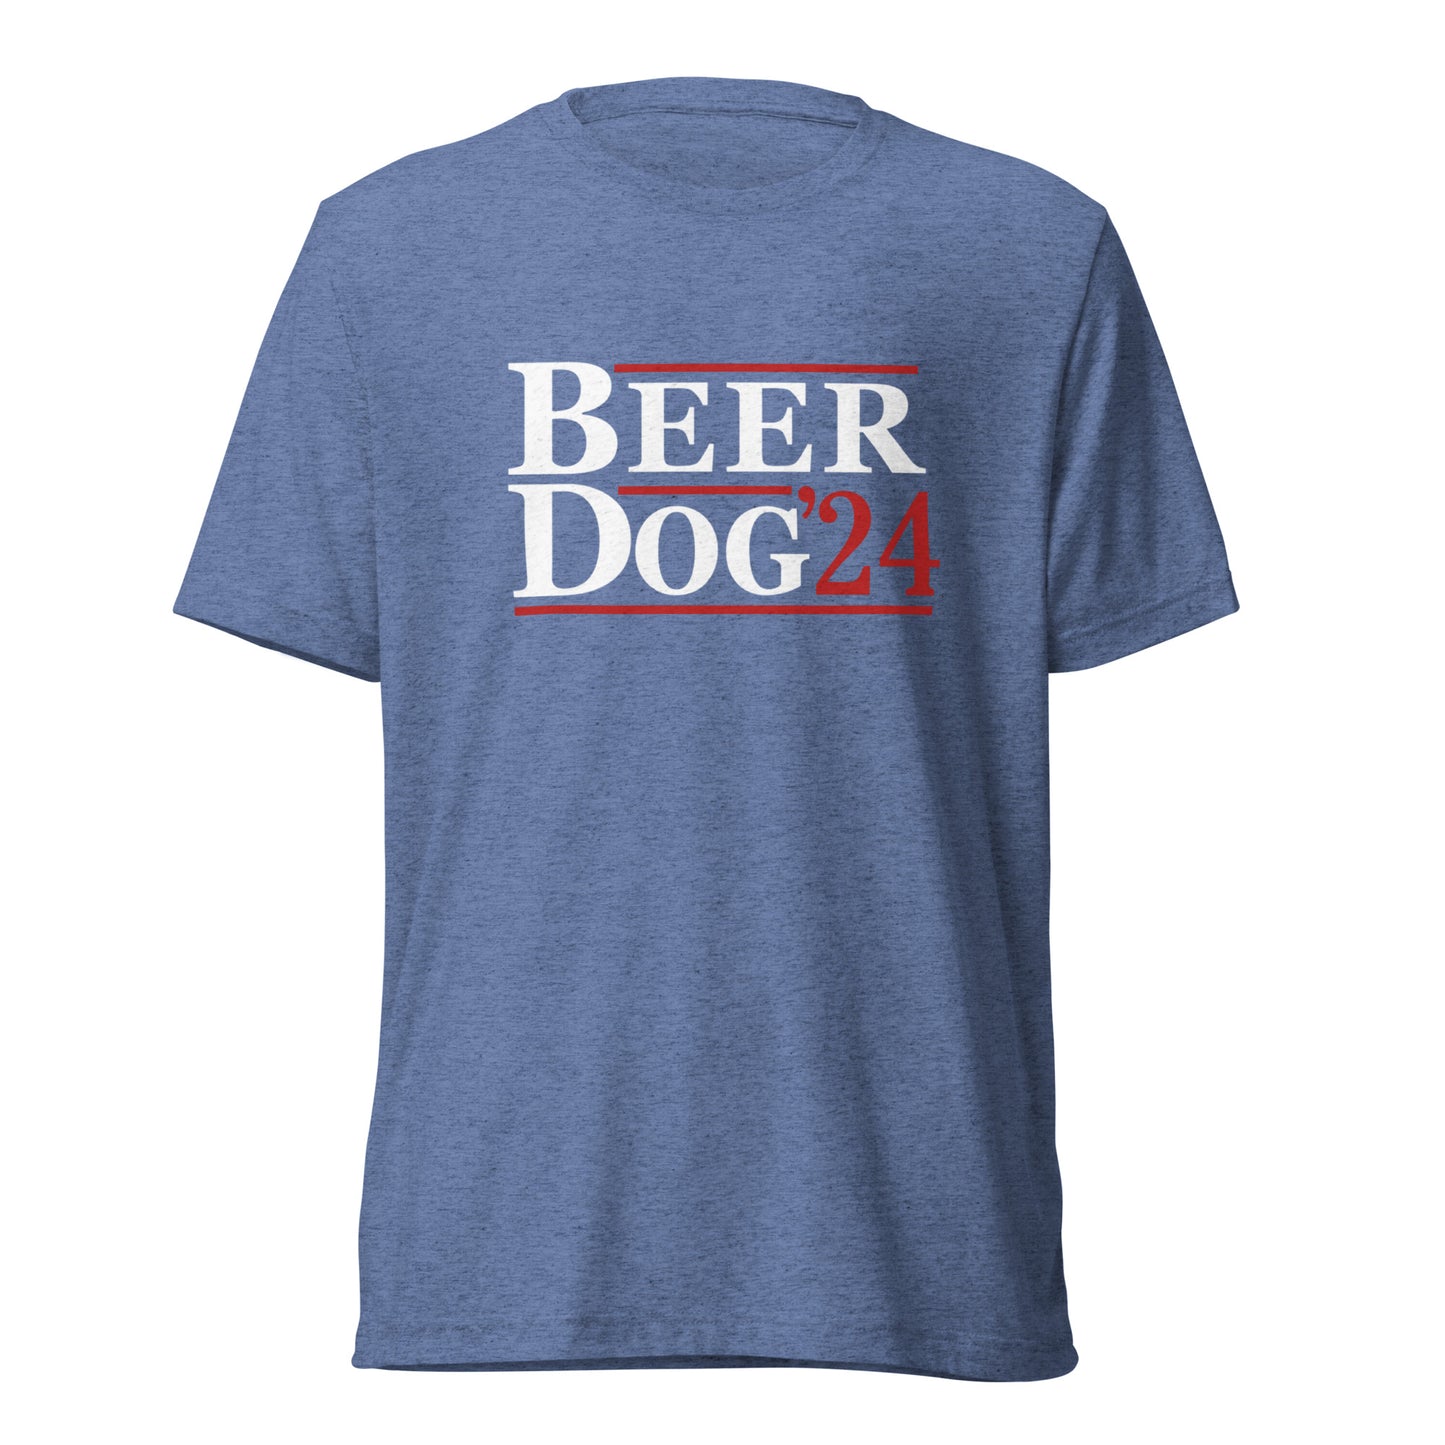 Beer Dog 24 Short sleeve t-shirt